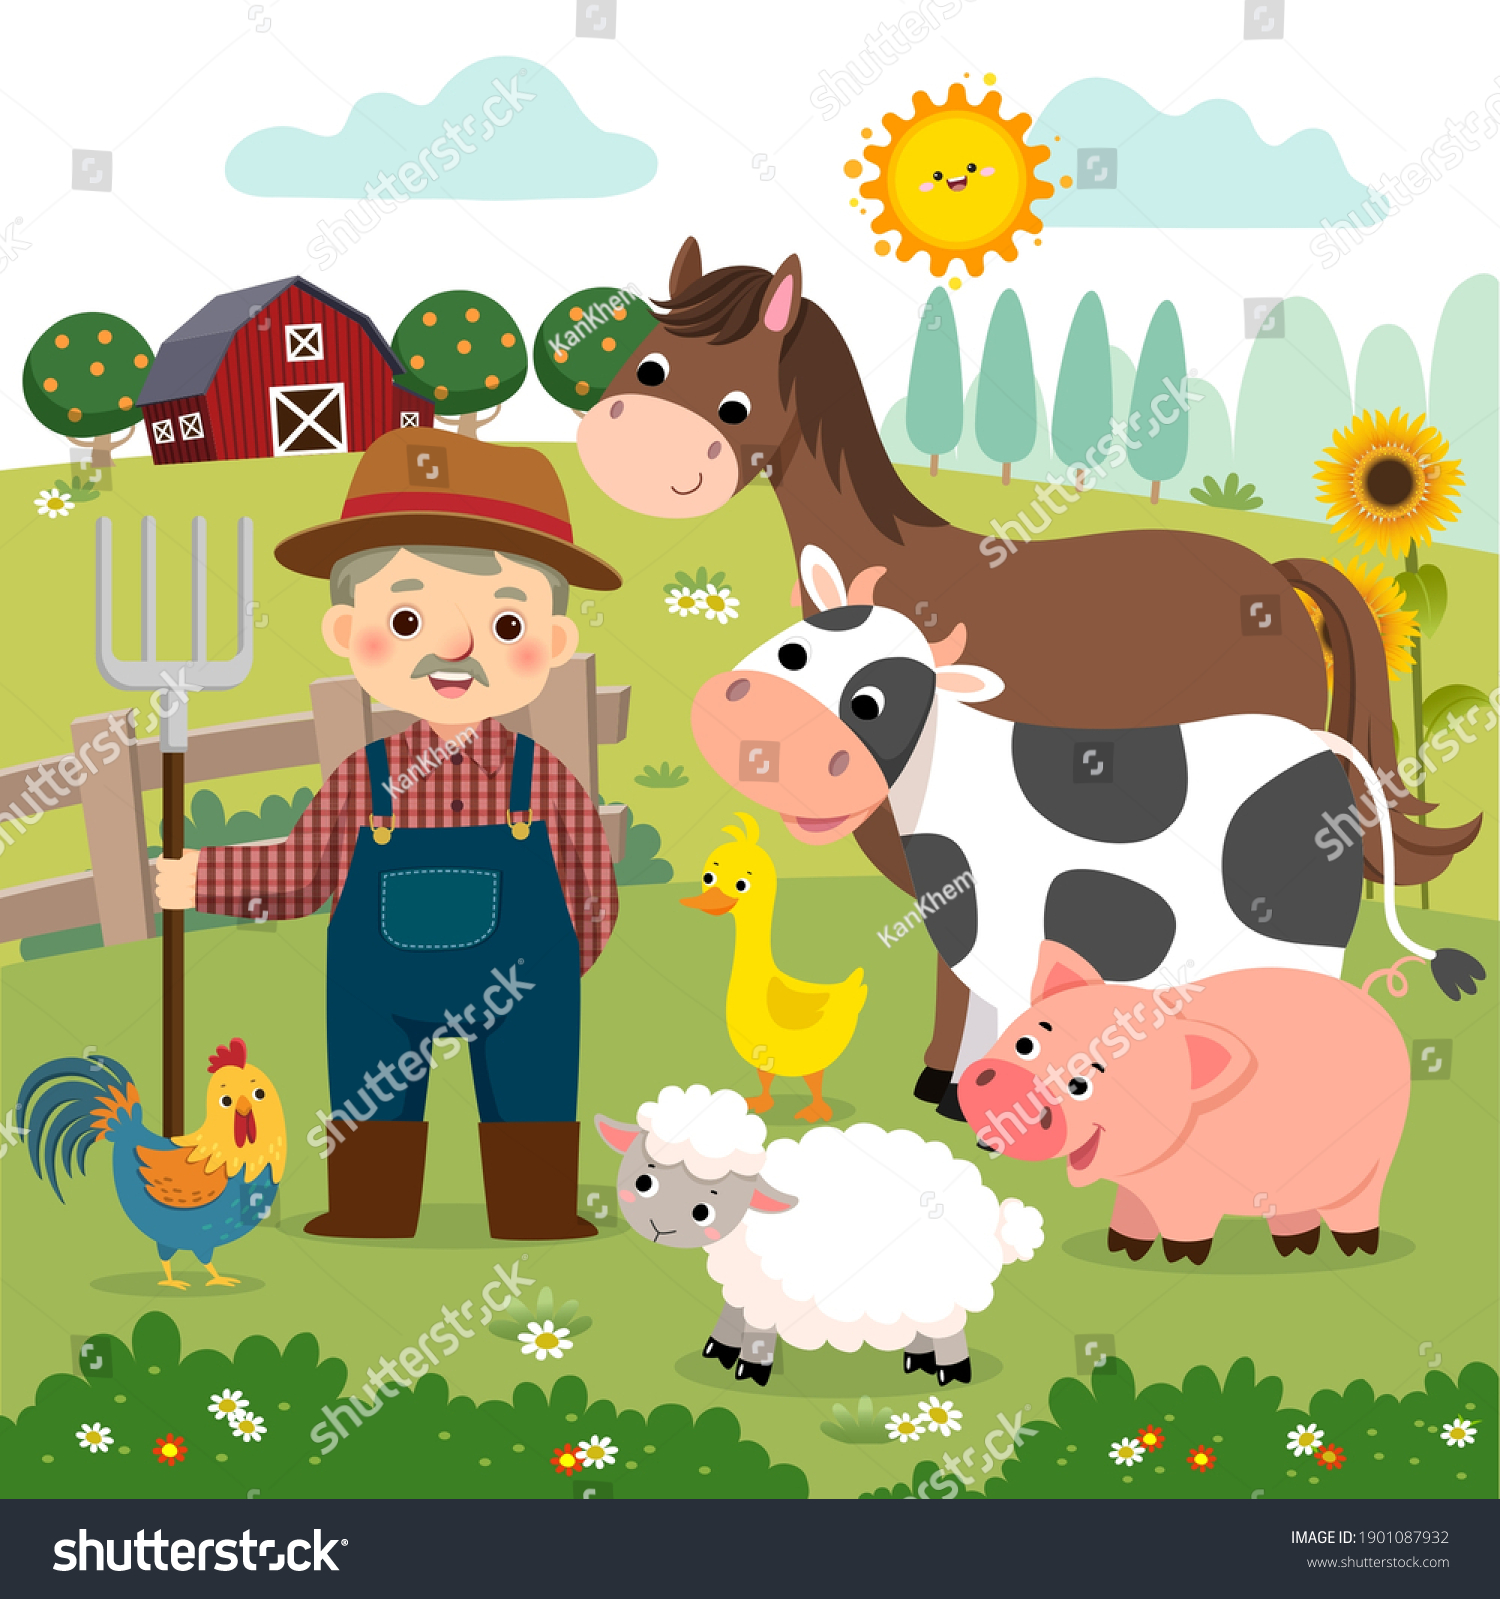 32,492 Farmer animal vector Images, Stock Photos & Vectors | Shutterstock